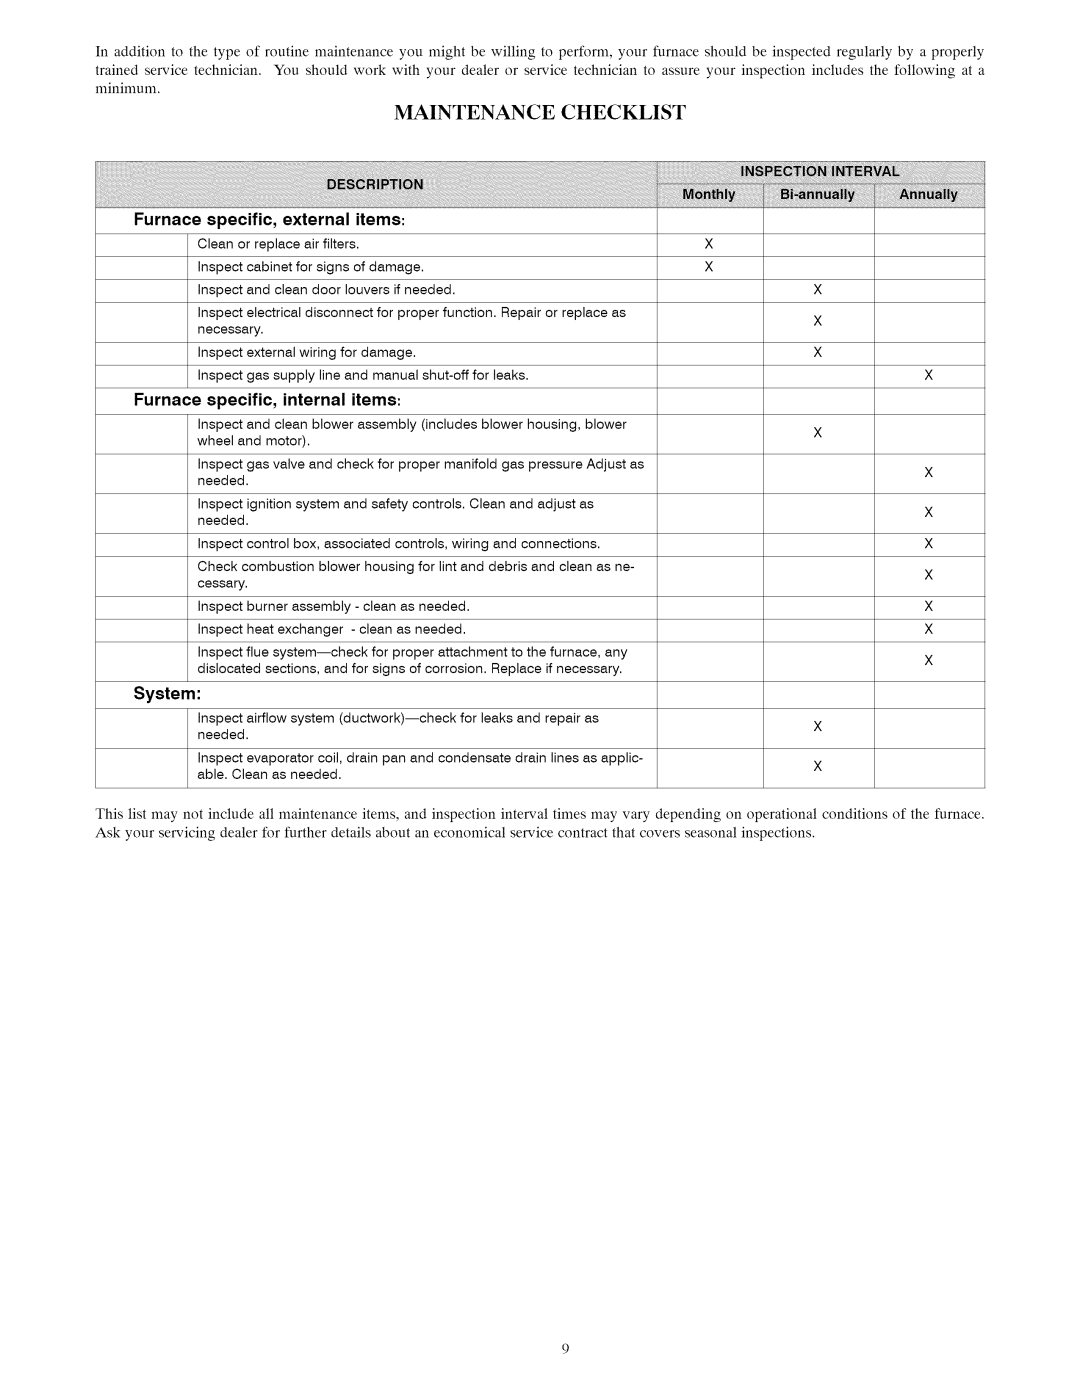 Carrier A10247 owner manual Maintenance Checklist, minimum 